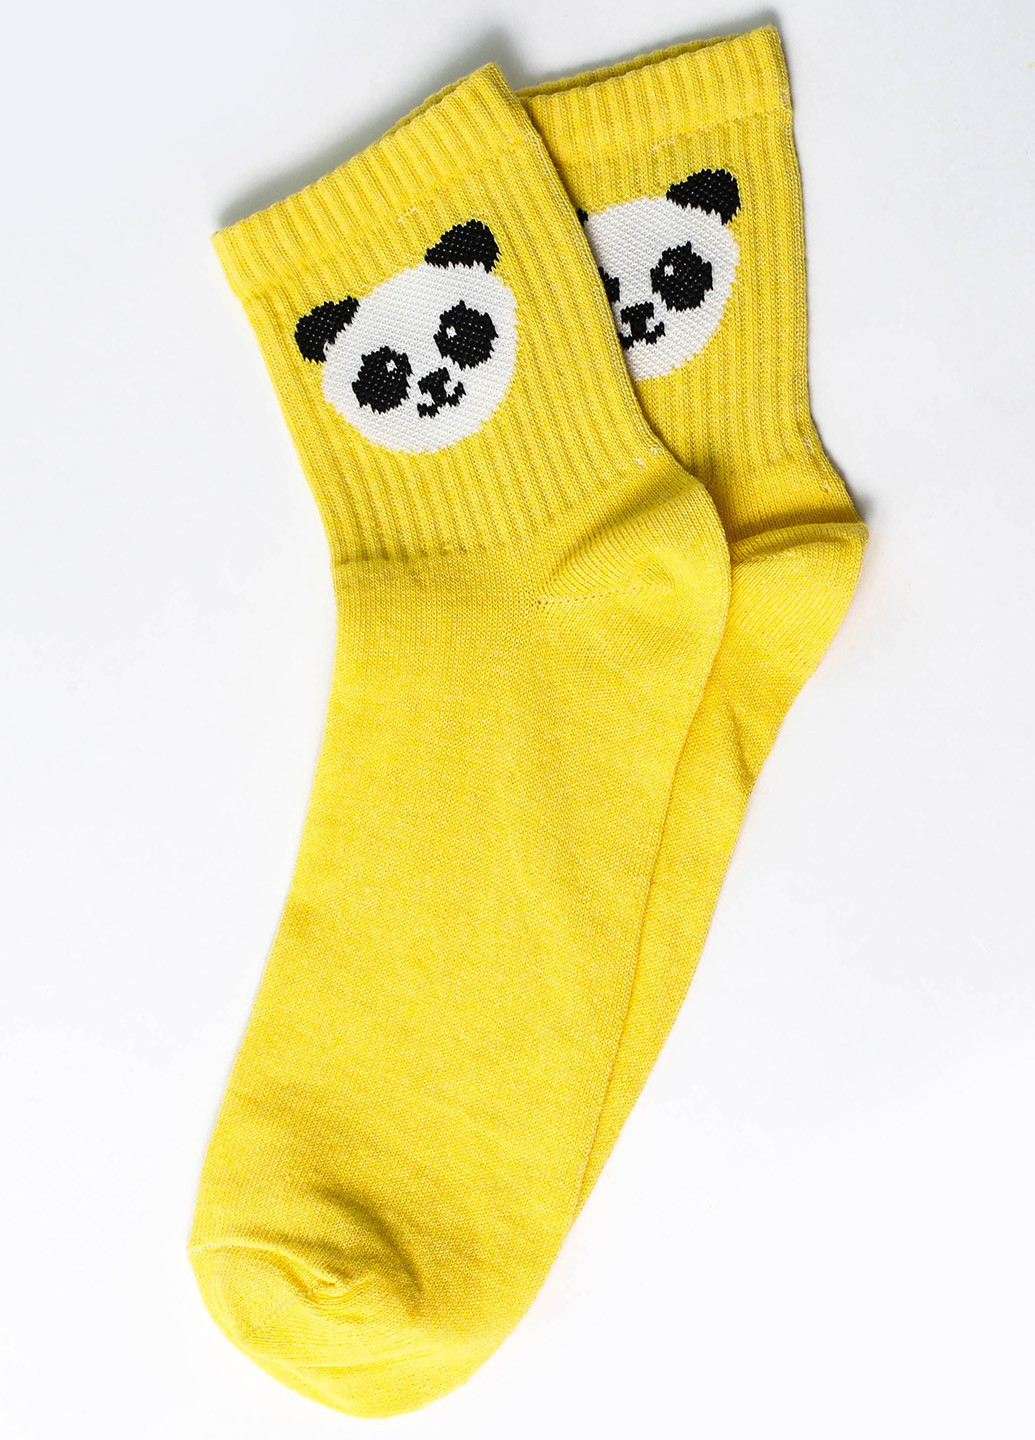 Носки Панда жёлтый Rock'n'socks жёлтые повседневные